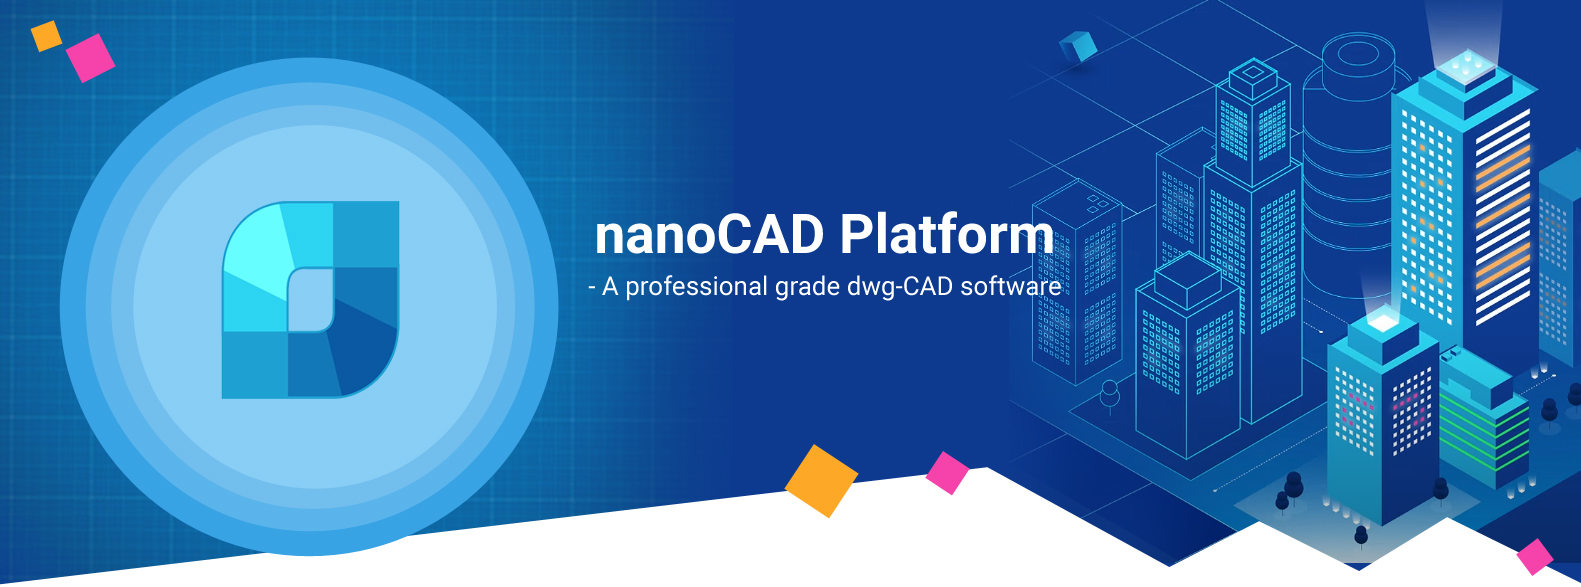 nanoCAD Platform